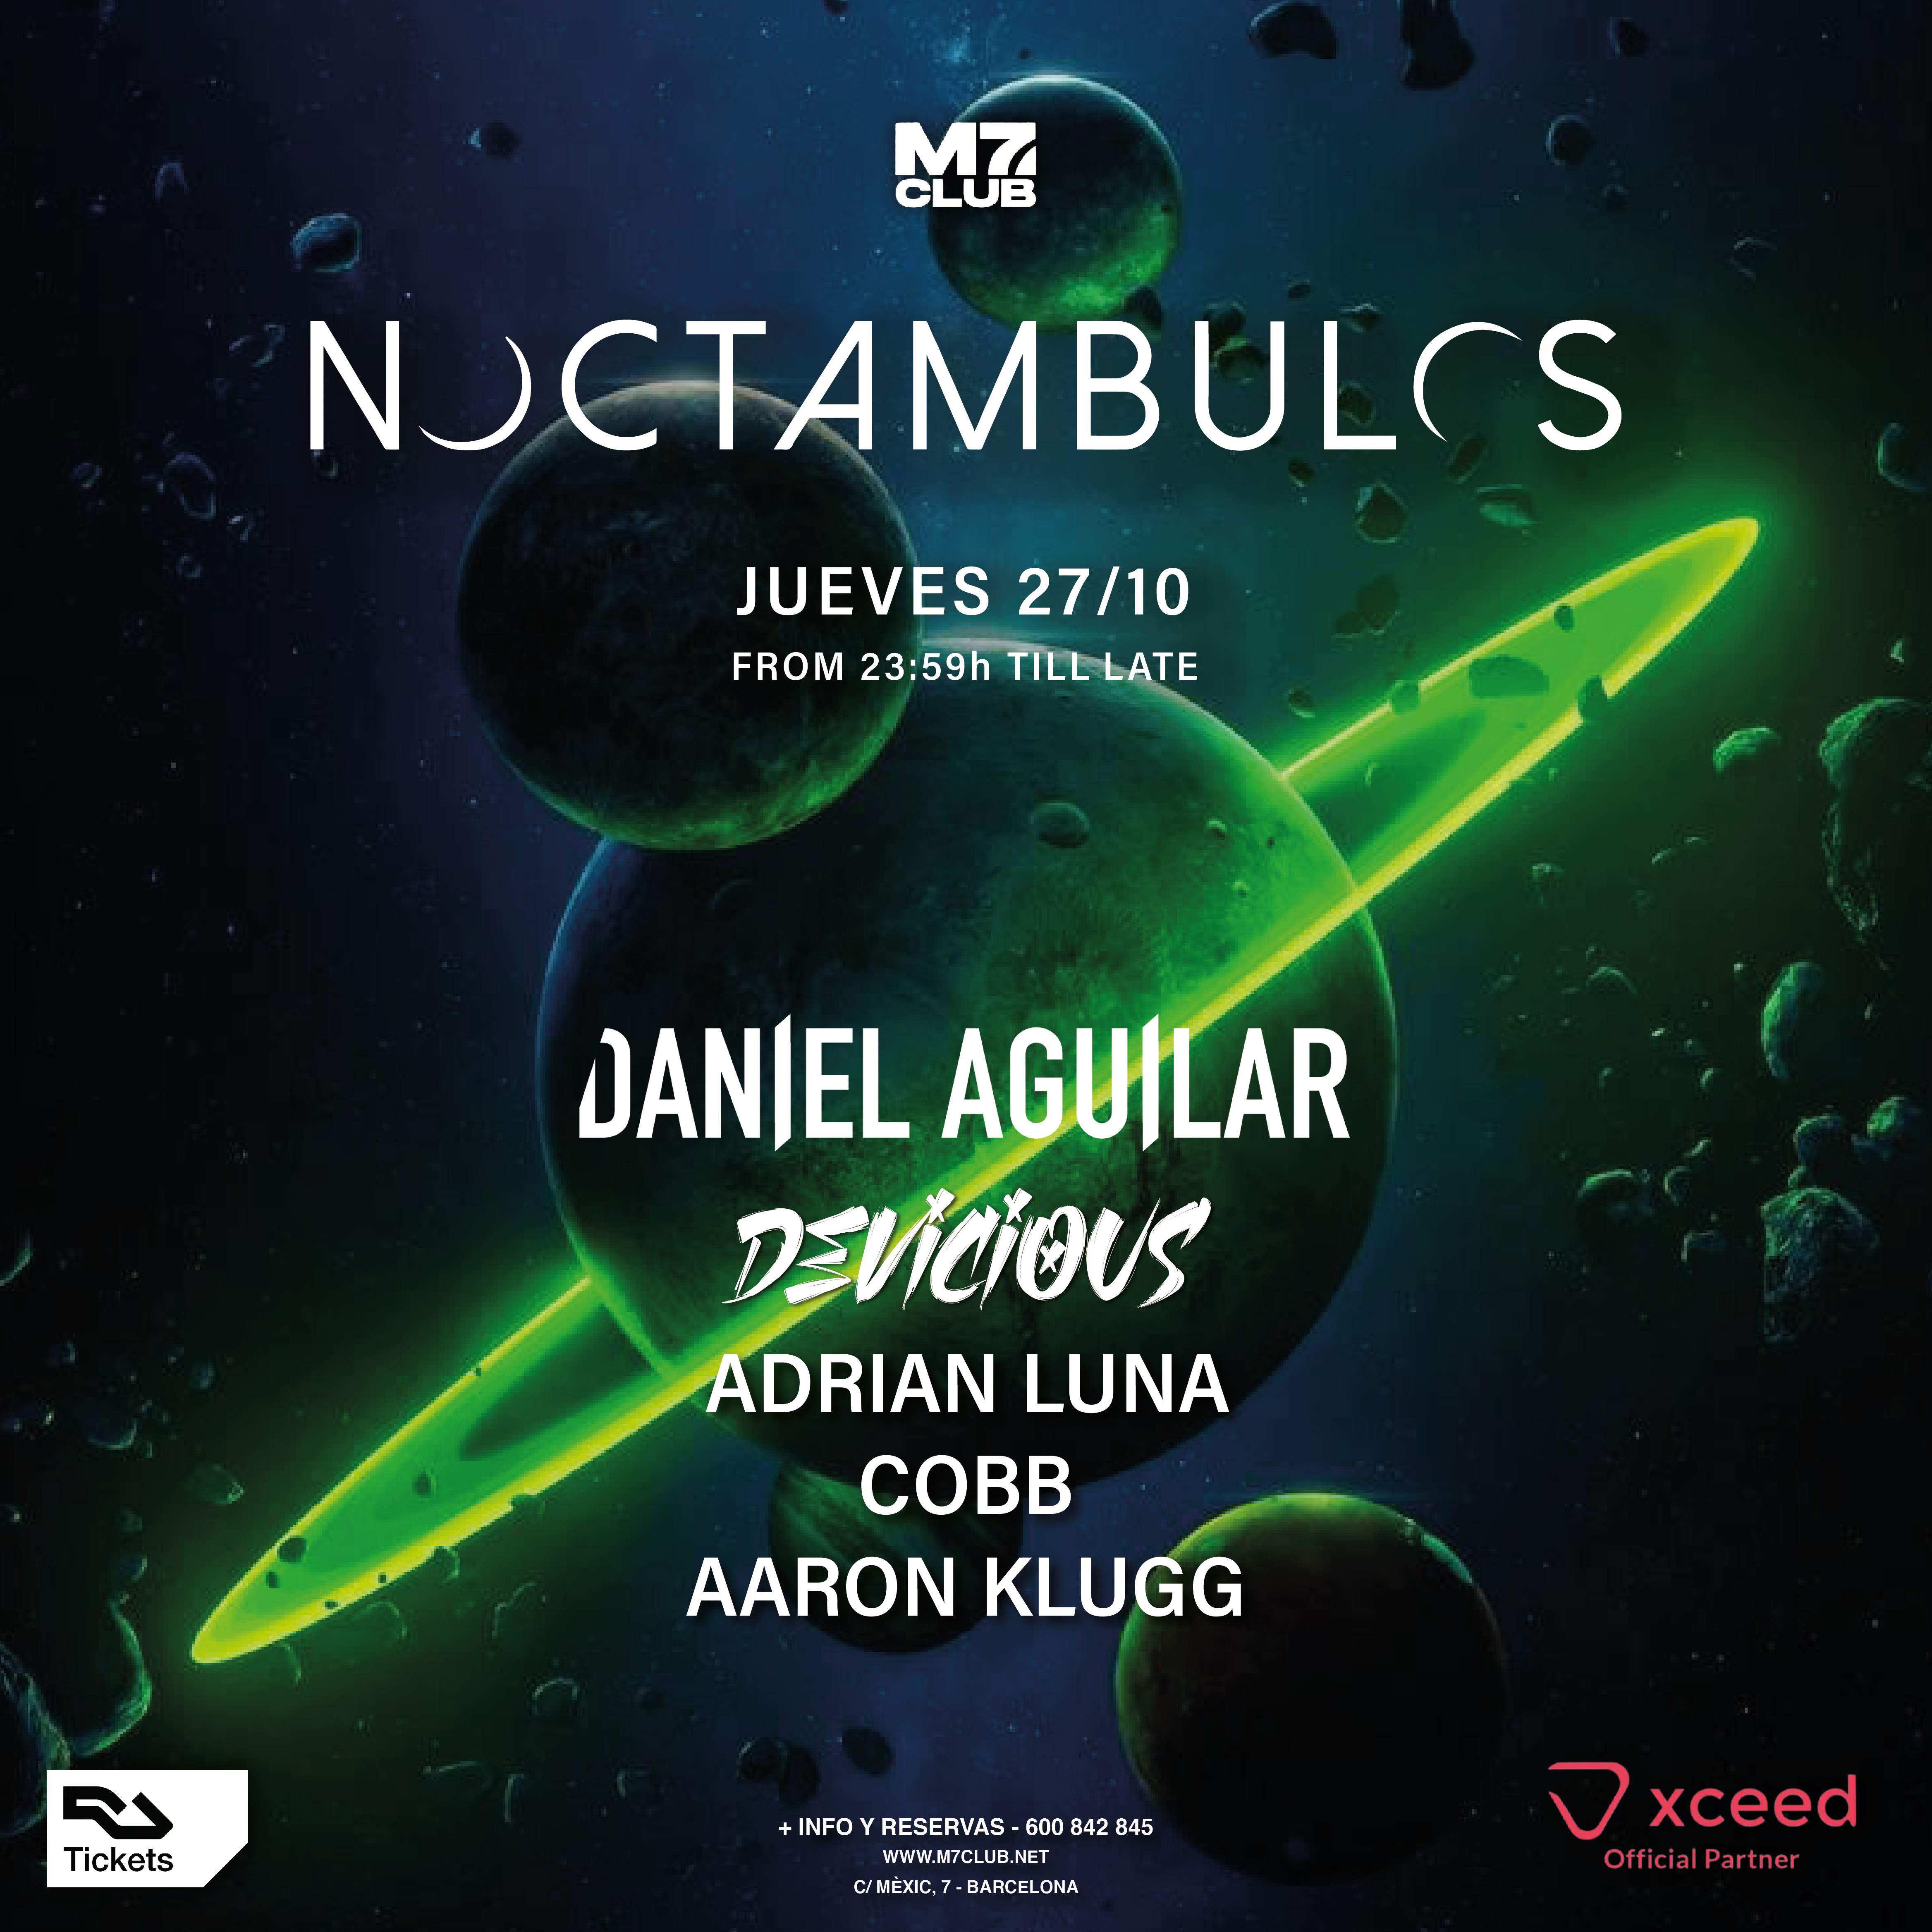 NOCTAMBULOS: The M7 Club pres. Daniel Aguilar at The M7, Barcelona